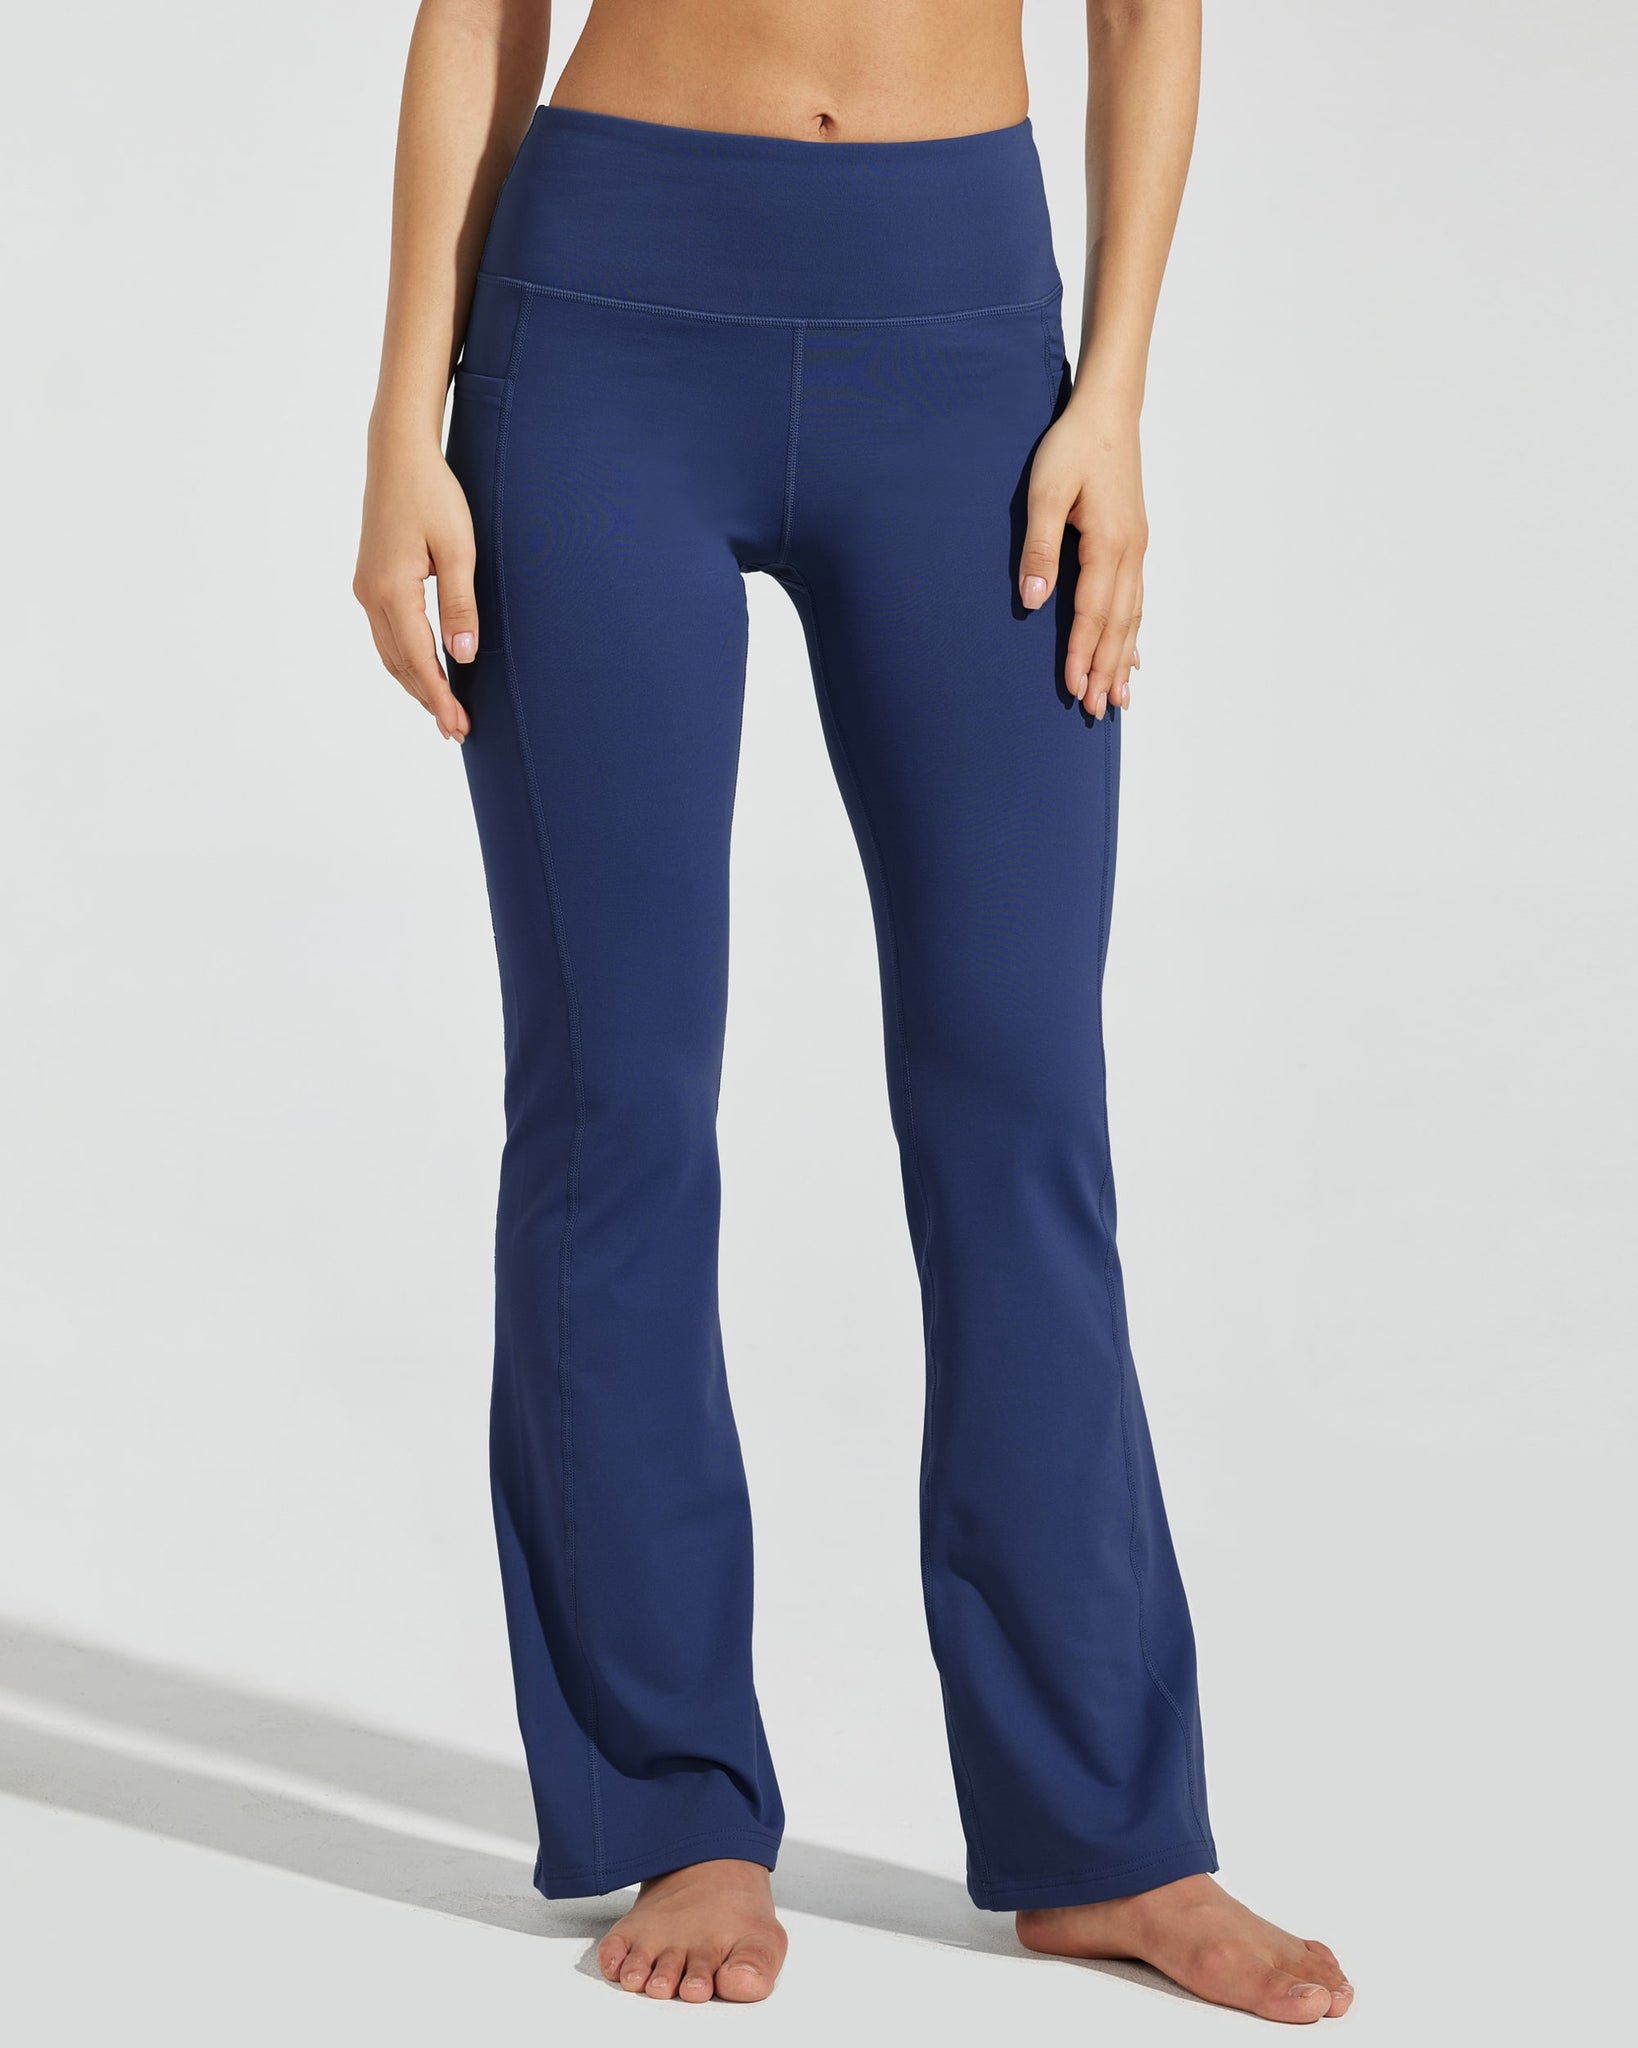 Women's Fleece Lined Bootcut Yoga Pants_Navy_model1